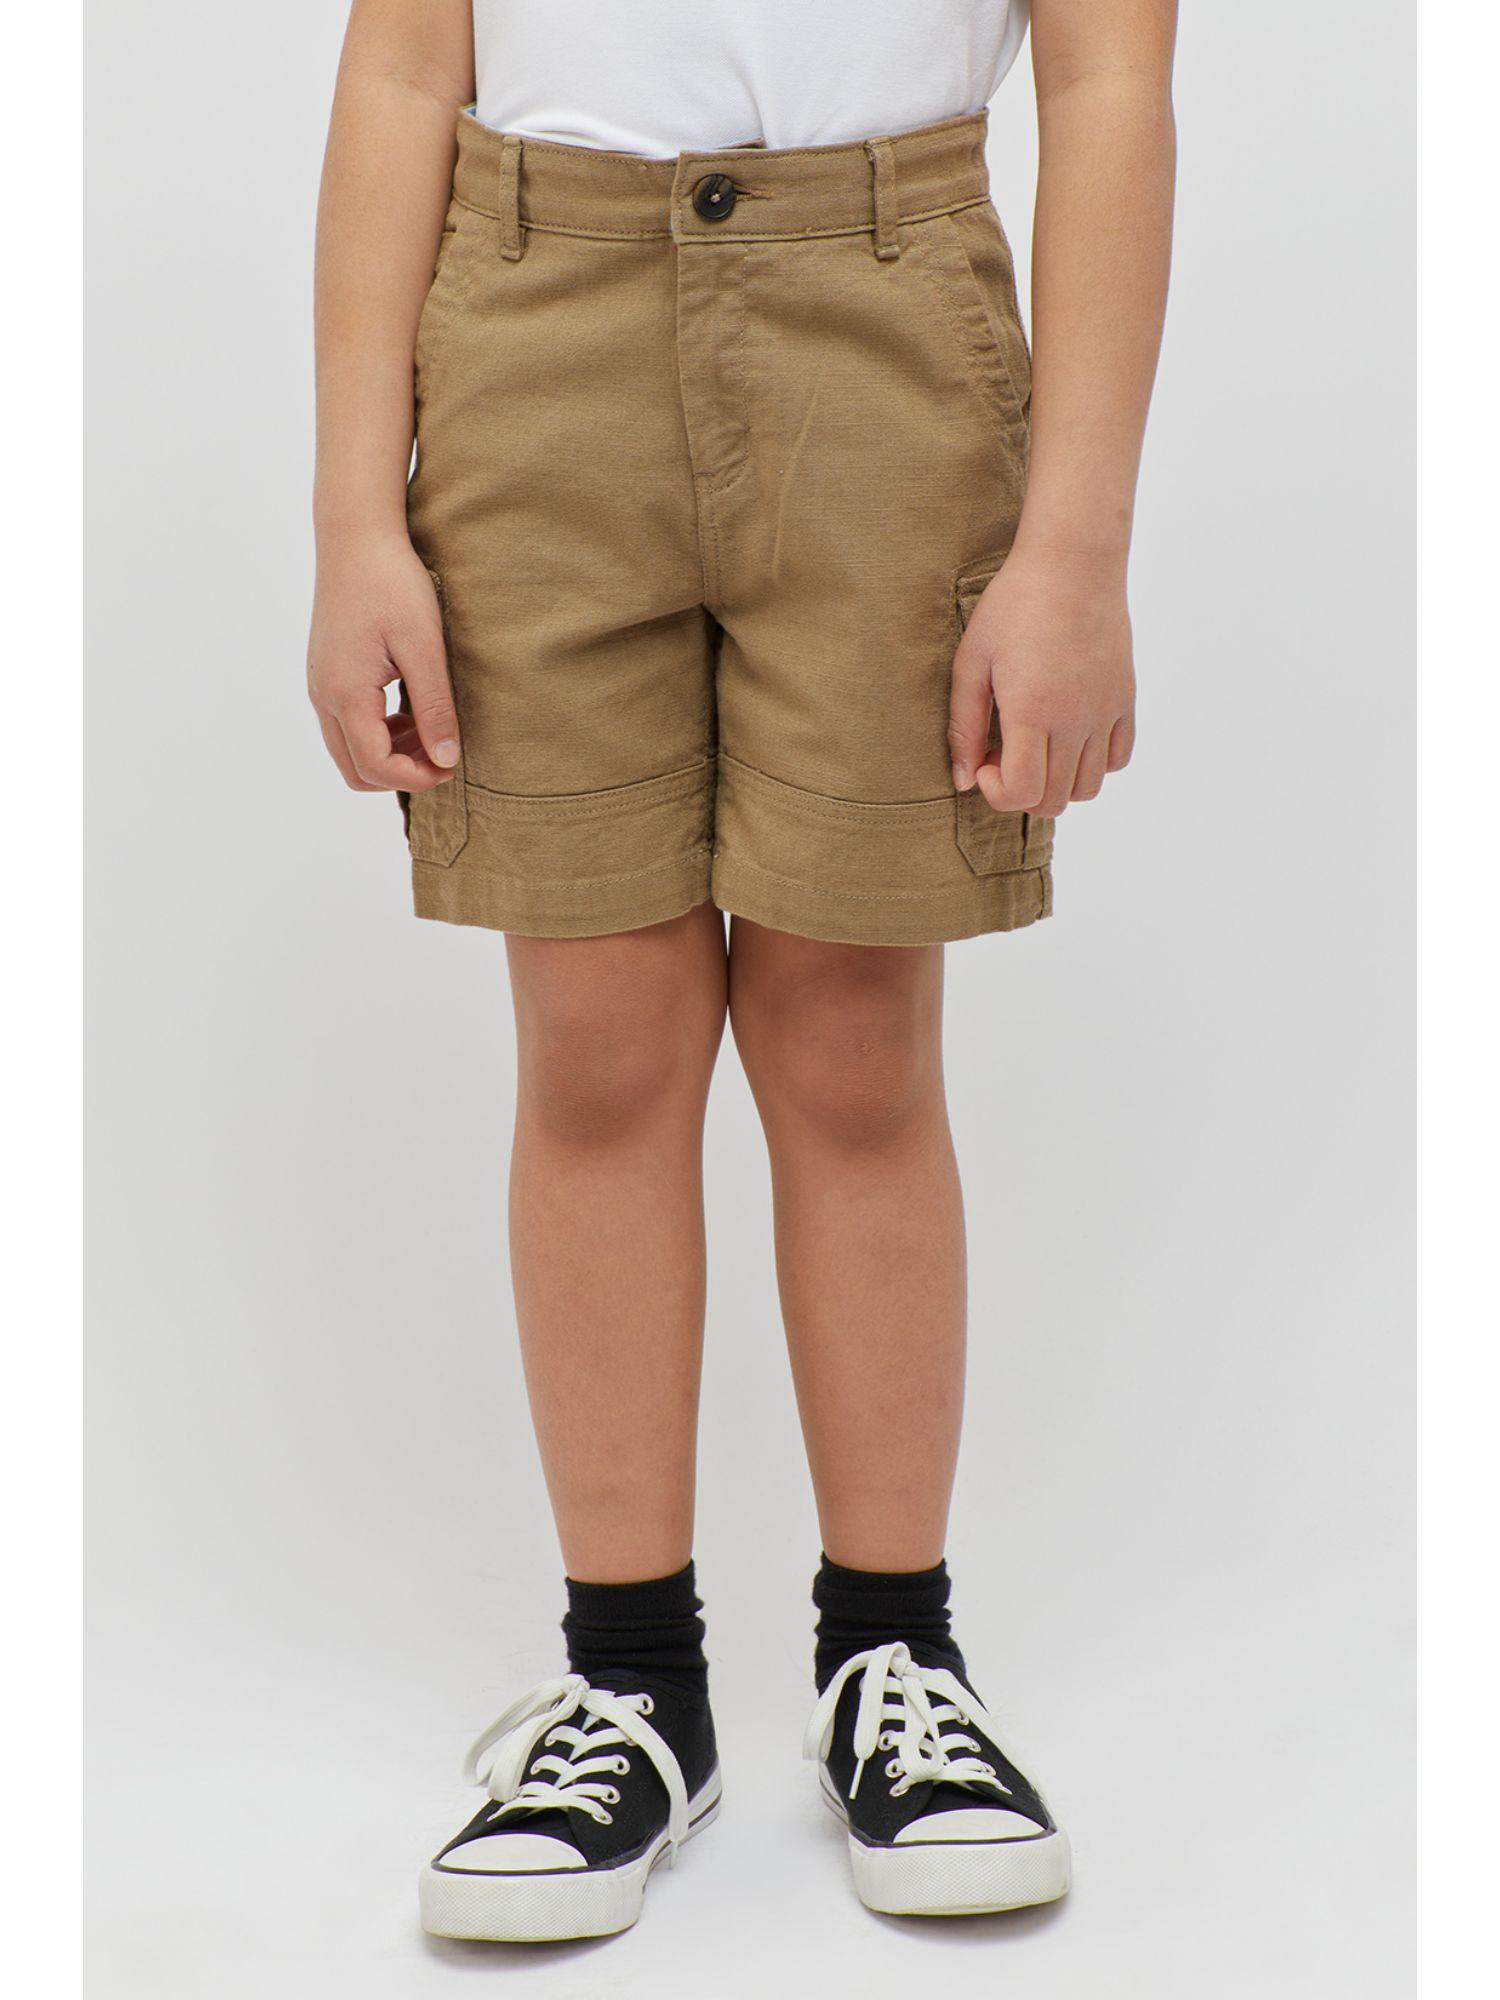 khaki shorts for boys